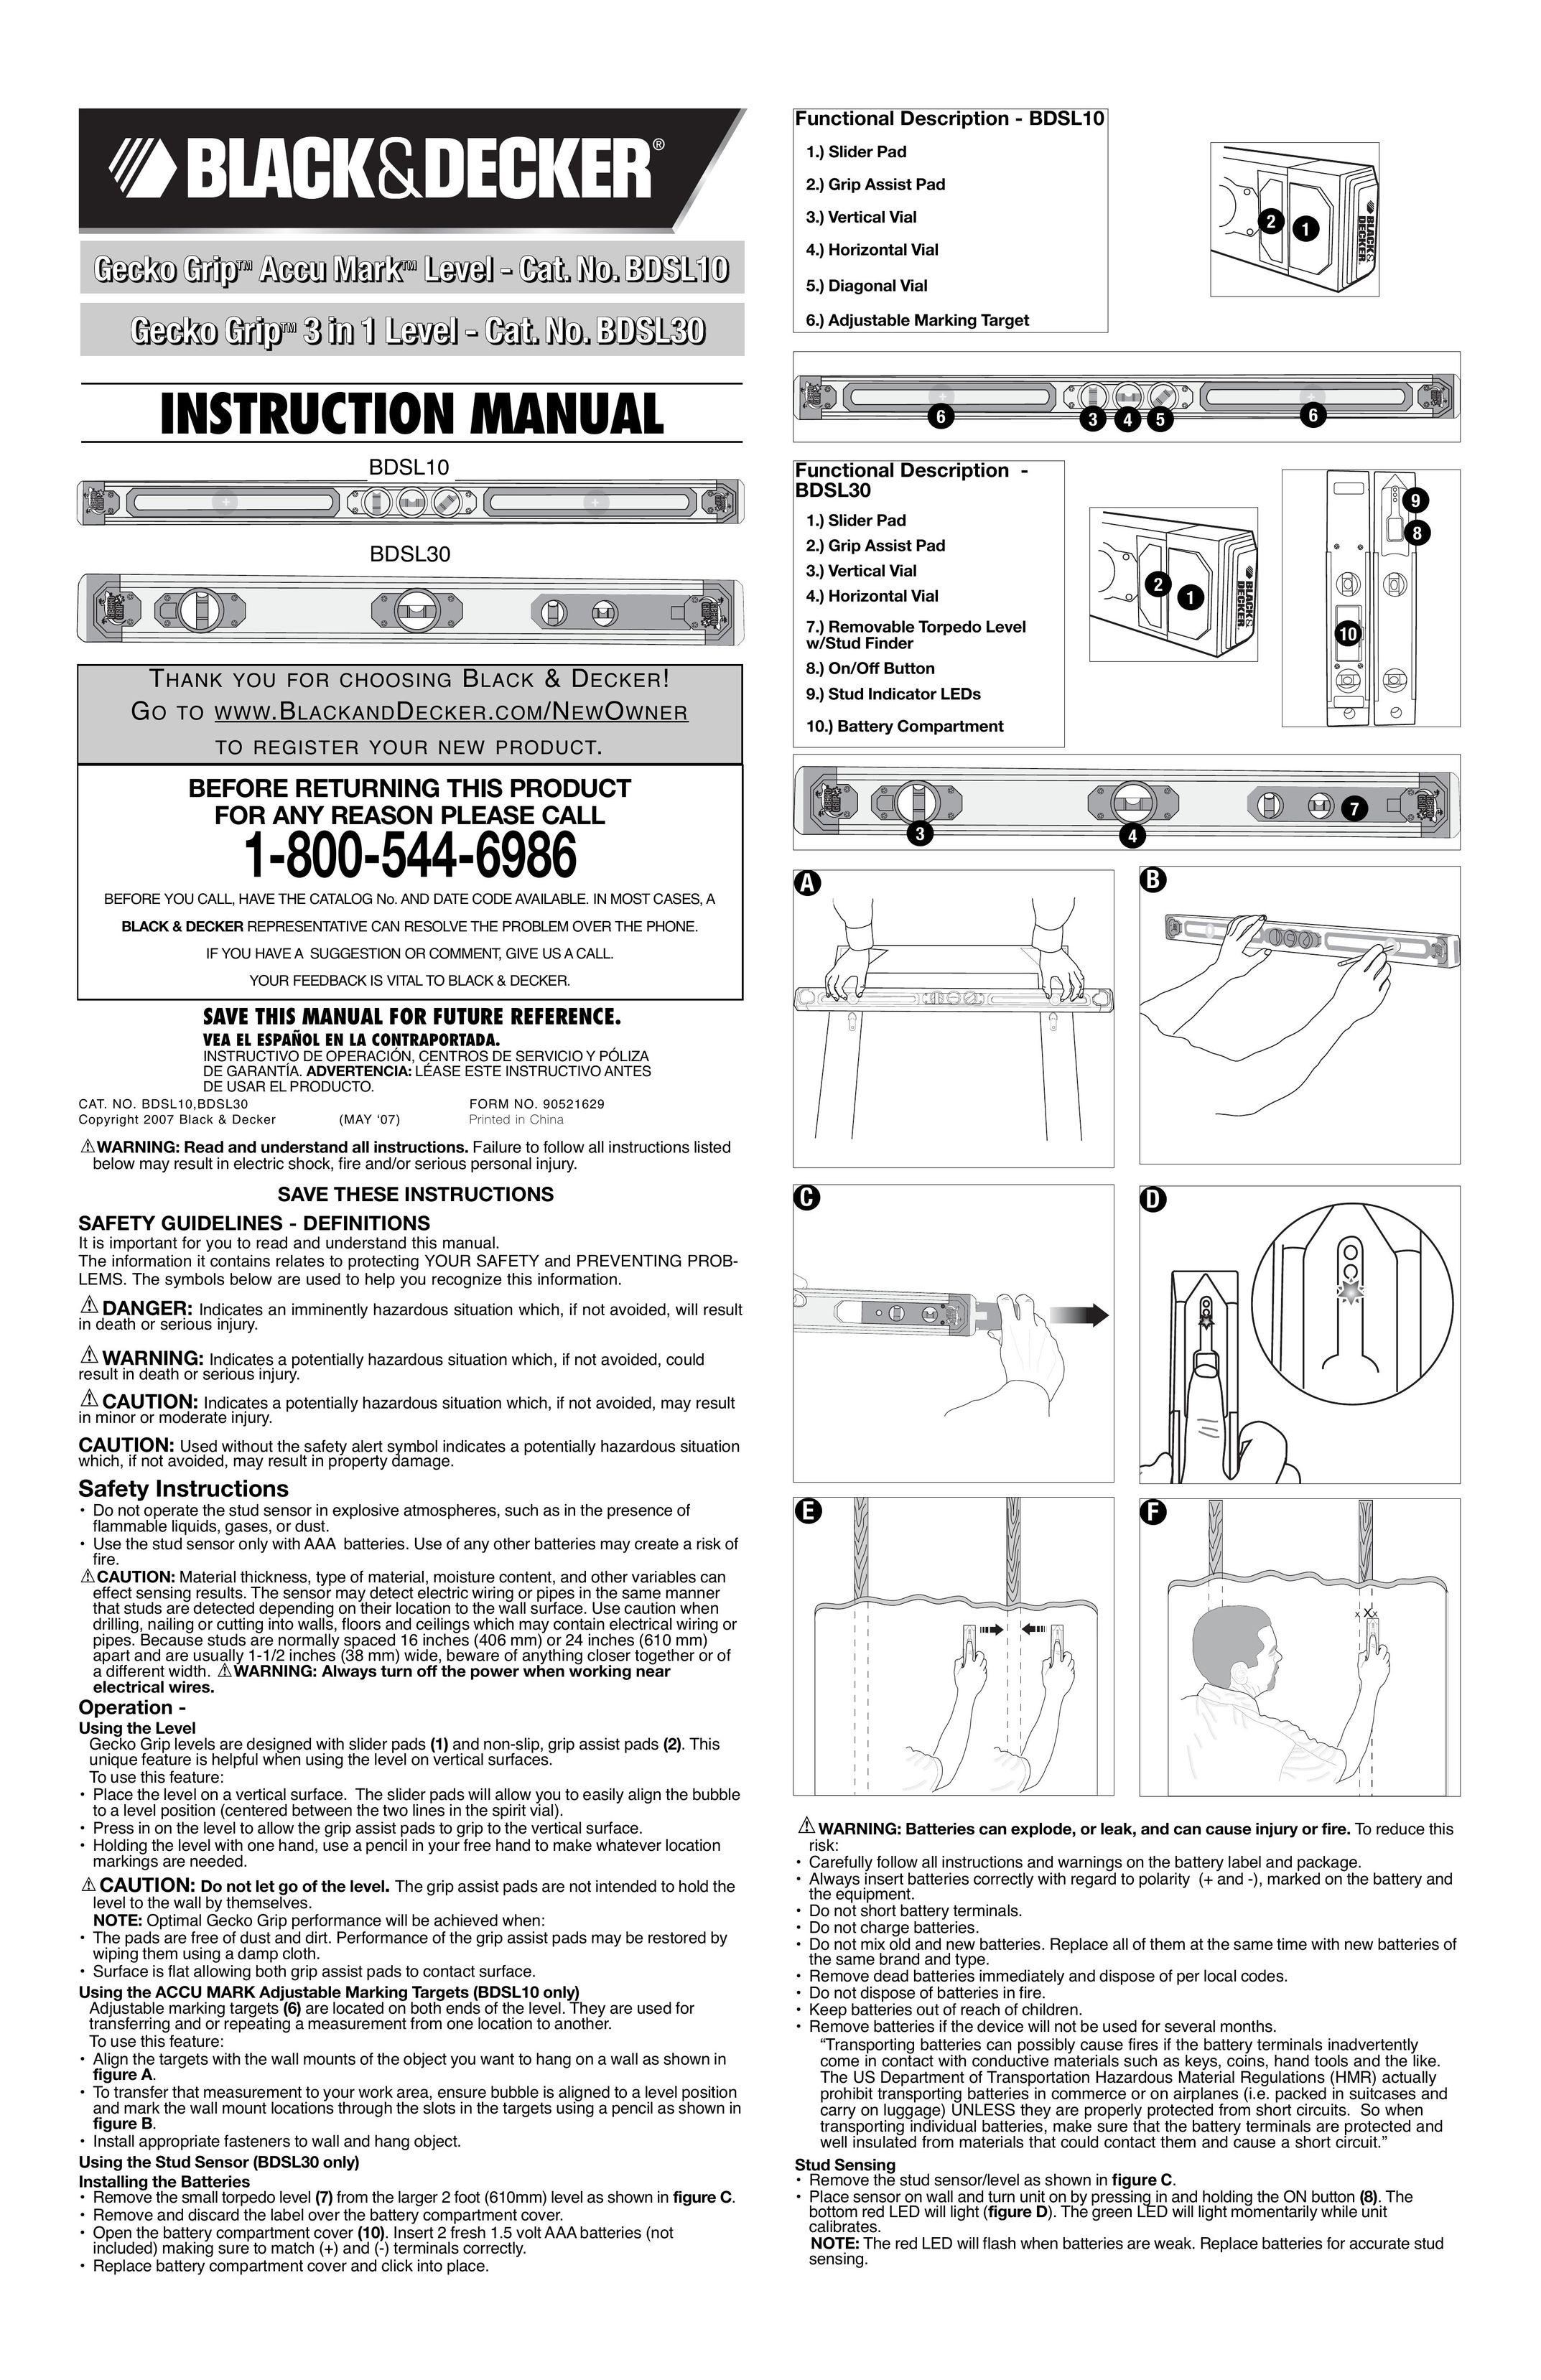 Black & Decker BDSL30 Freezer User Manual